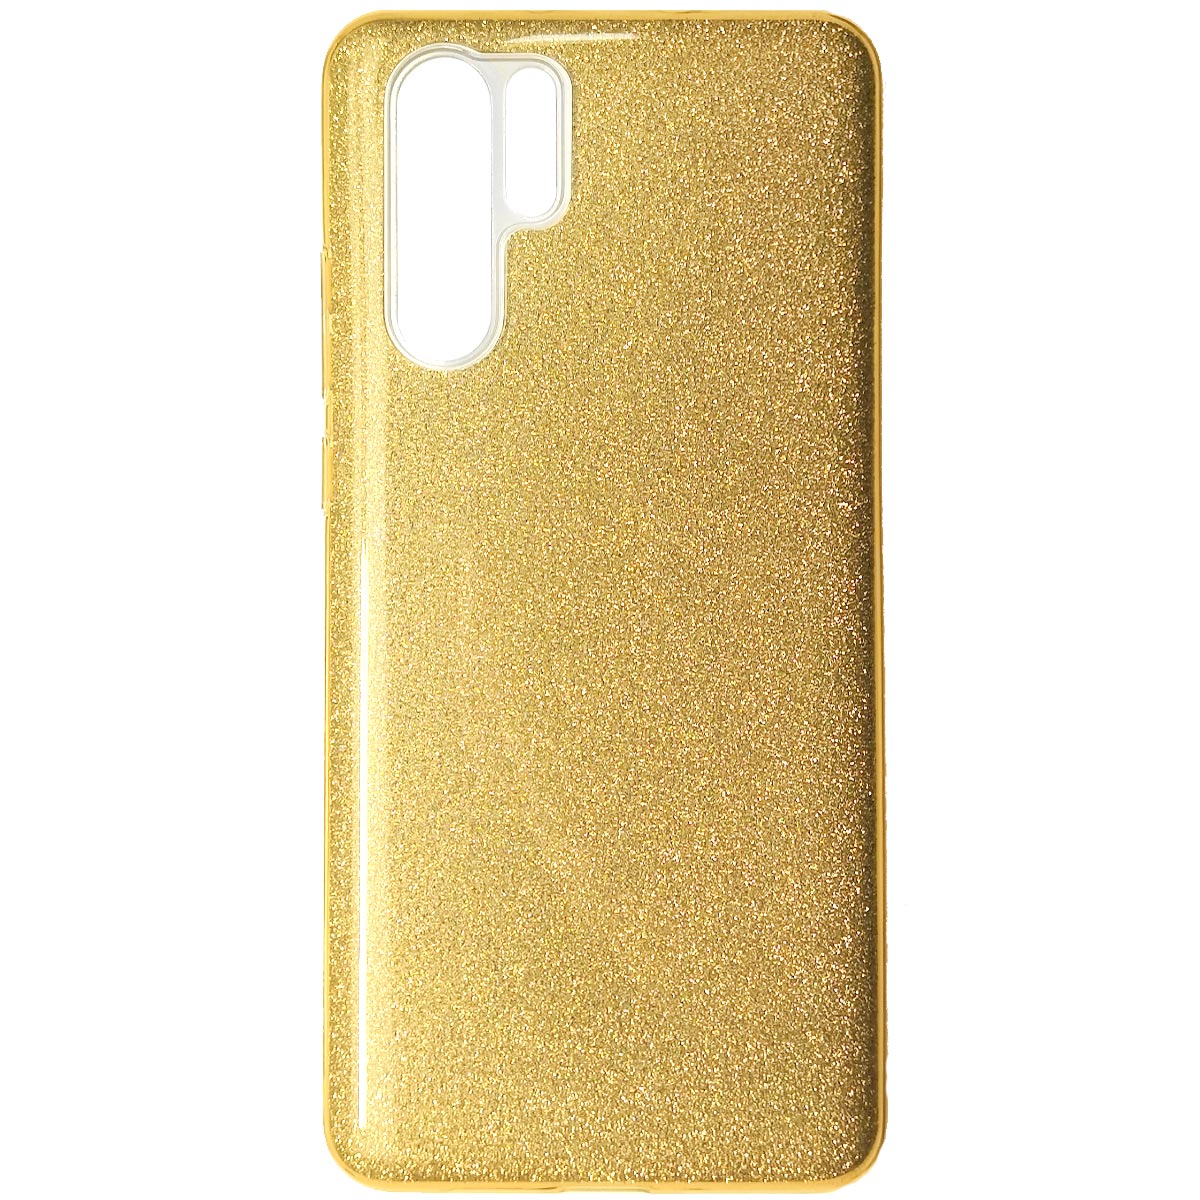 Чехол накладка Shine для HUAWEI P30 Pro (VOG-L29), силикон, блестки, цвет золотистый